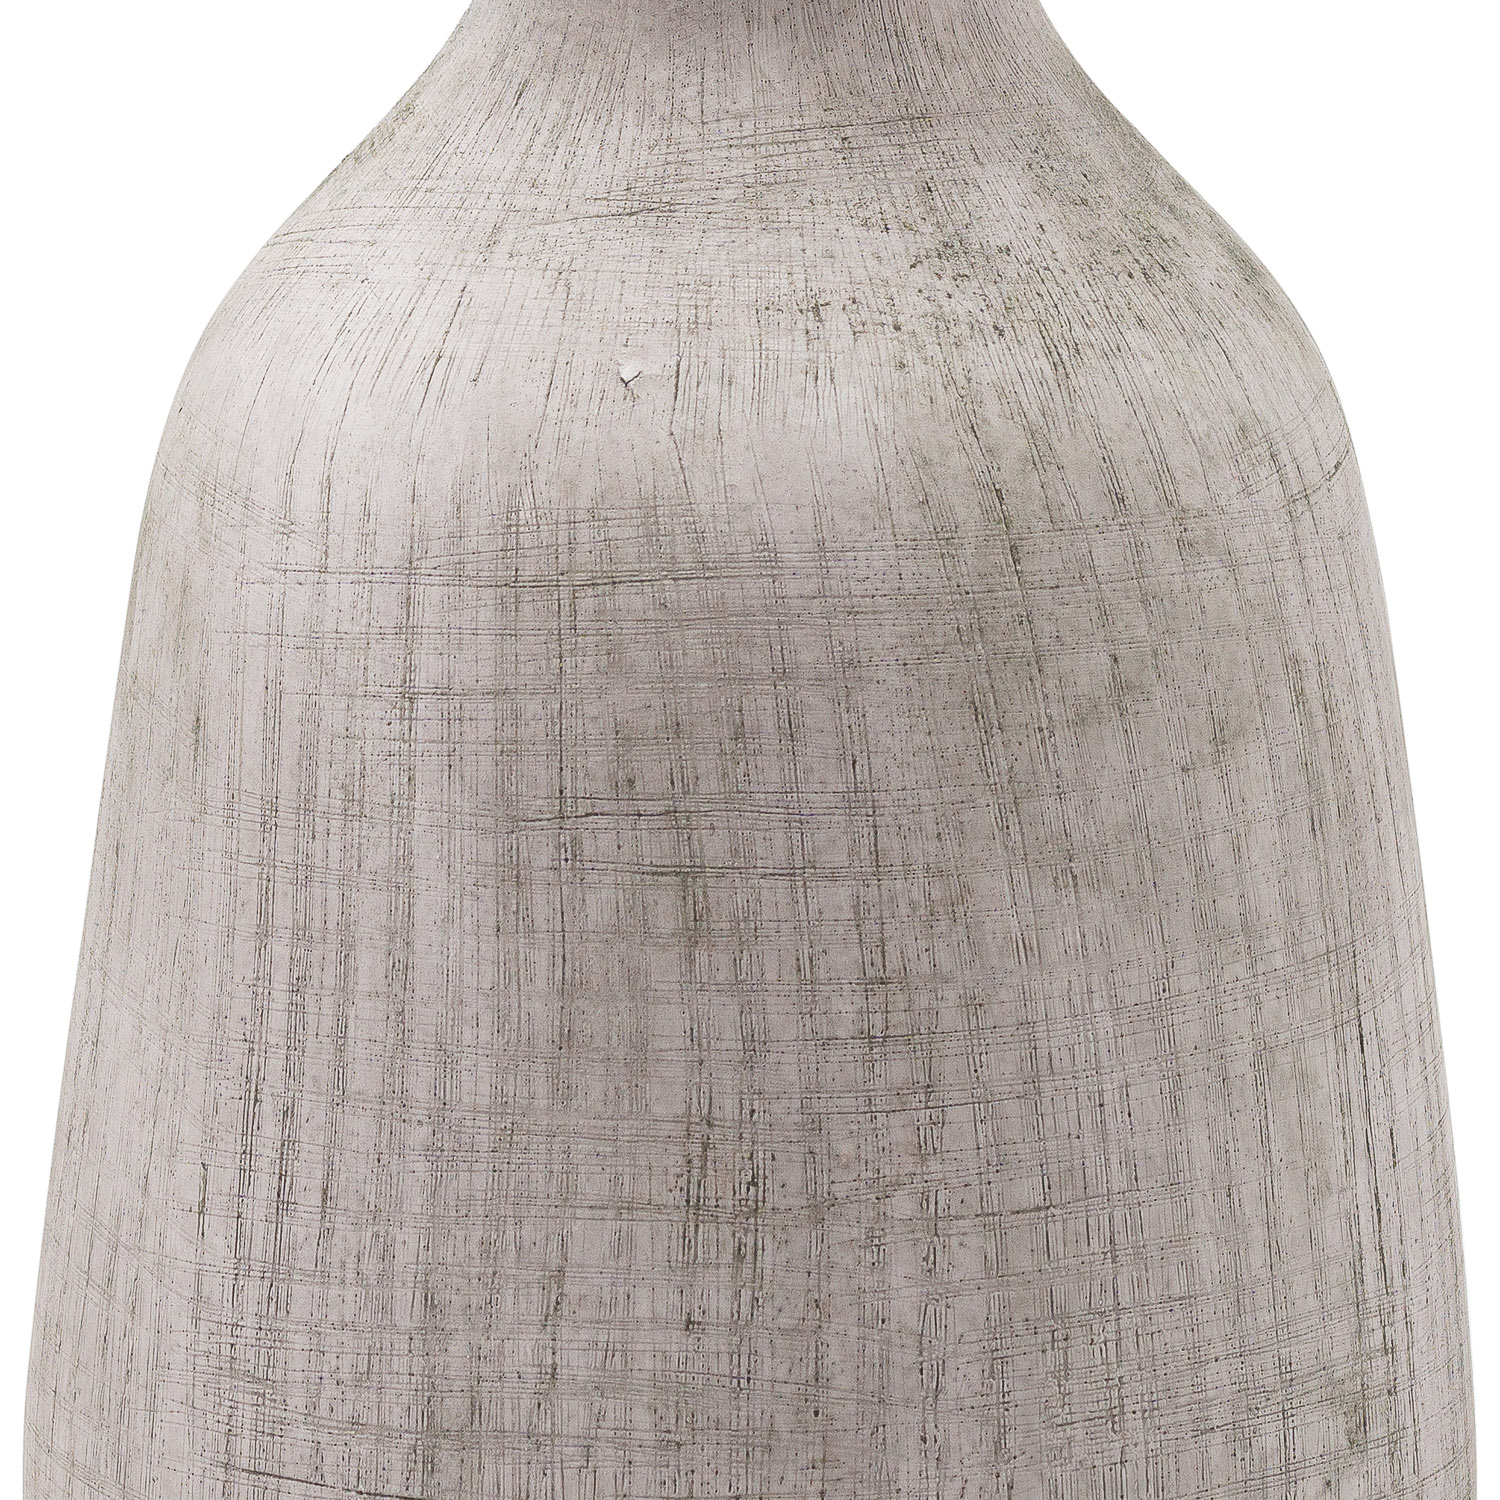 Bloomville Ople Stone Vase - Image 2